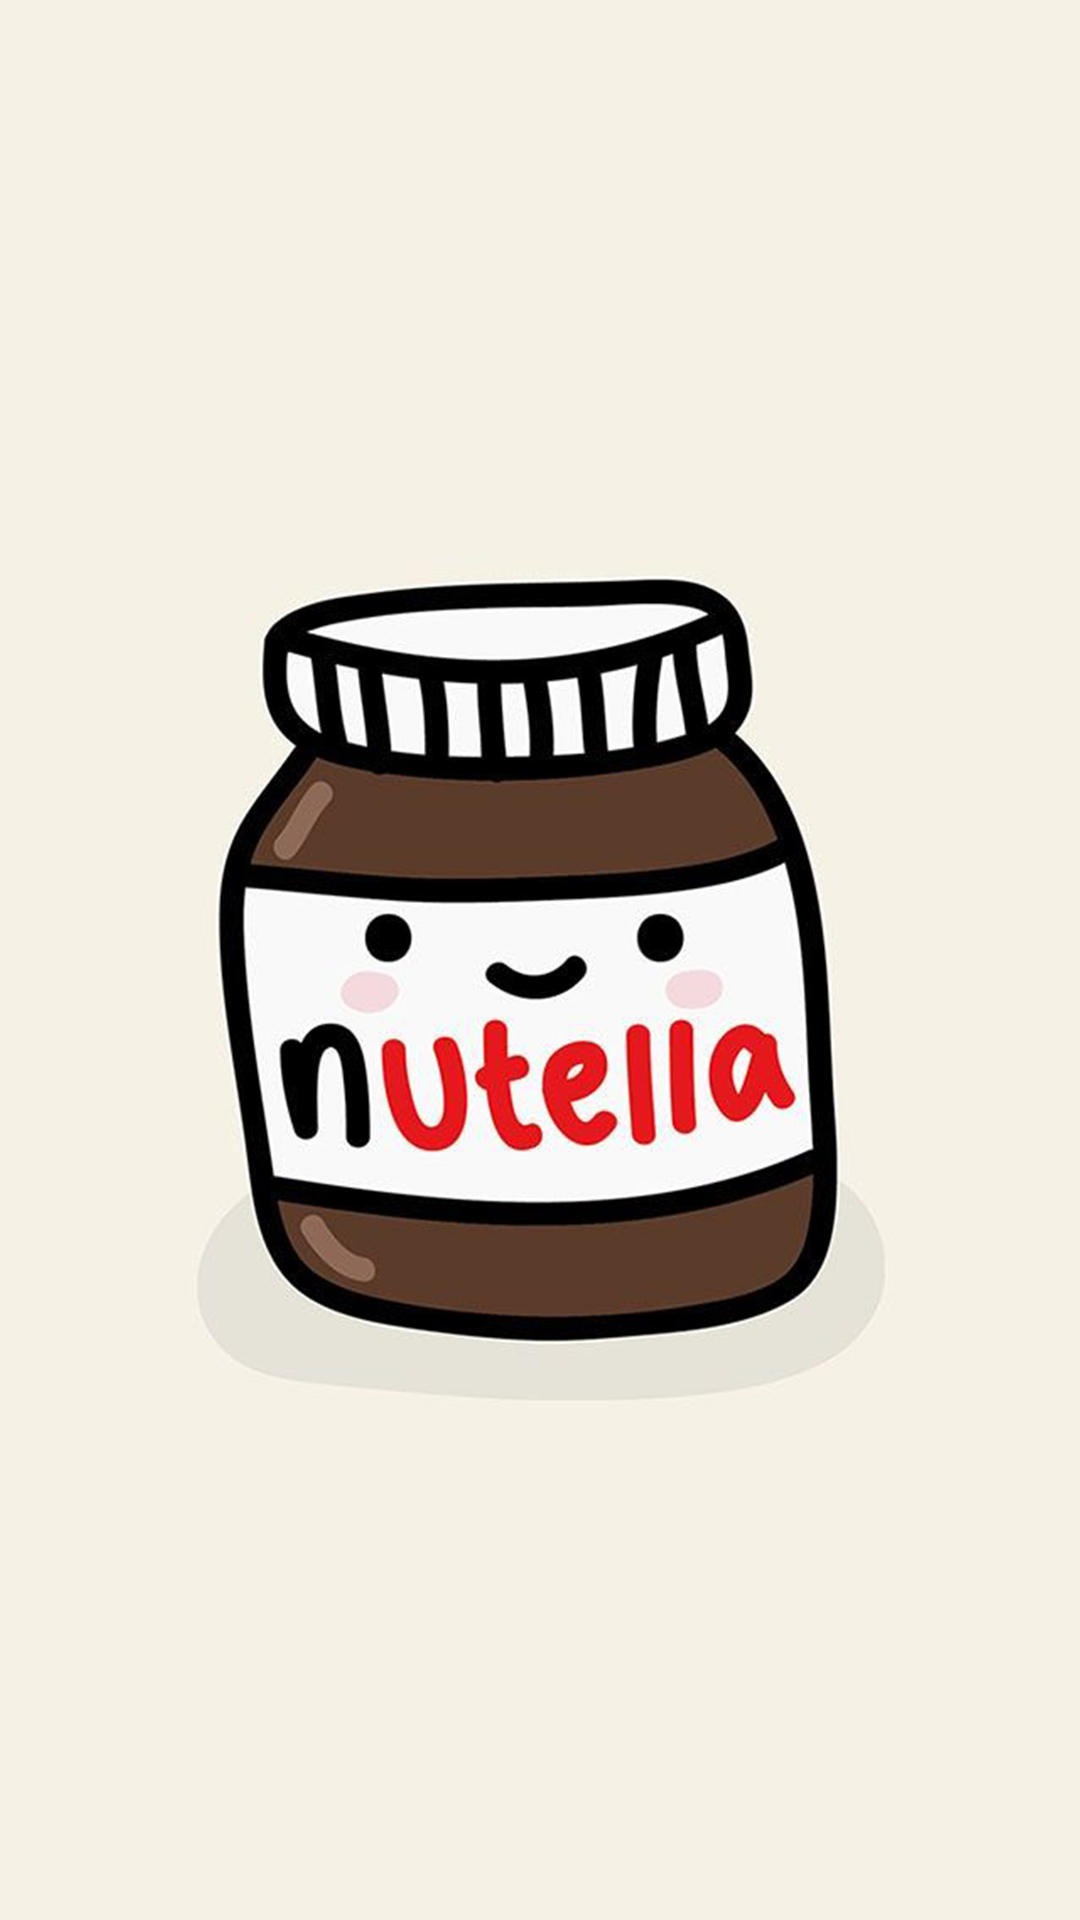 nutella wallpaper,product,chocolate spread,food,logo,chocolate milk